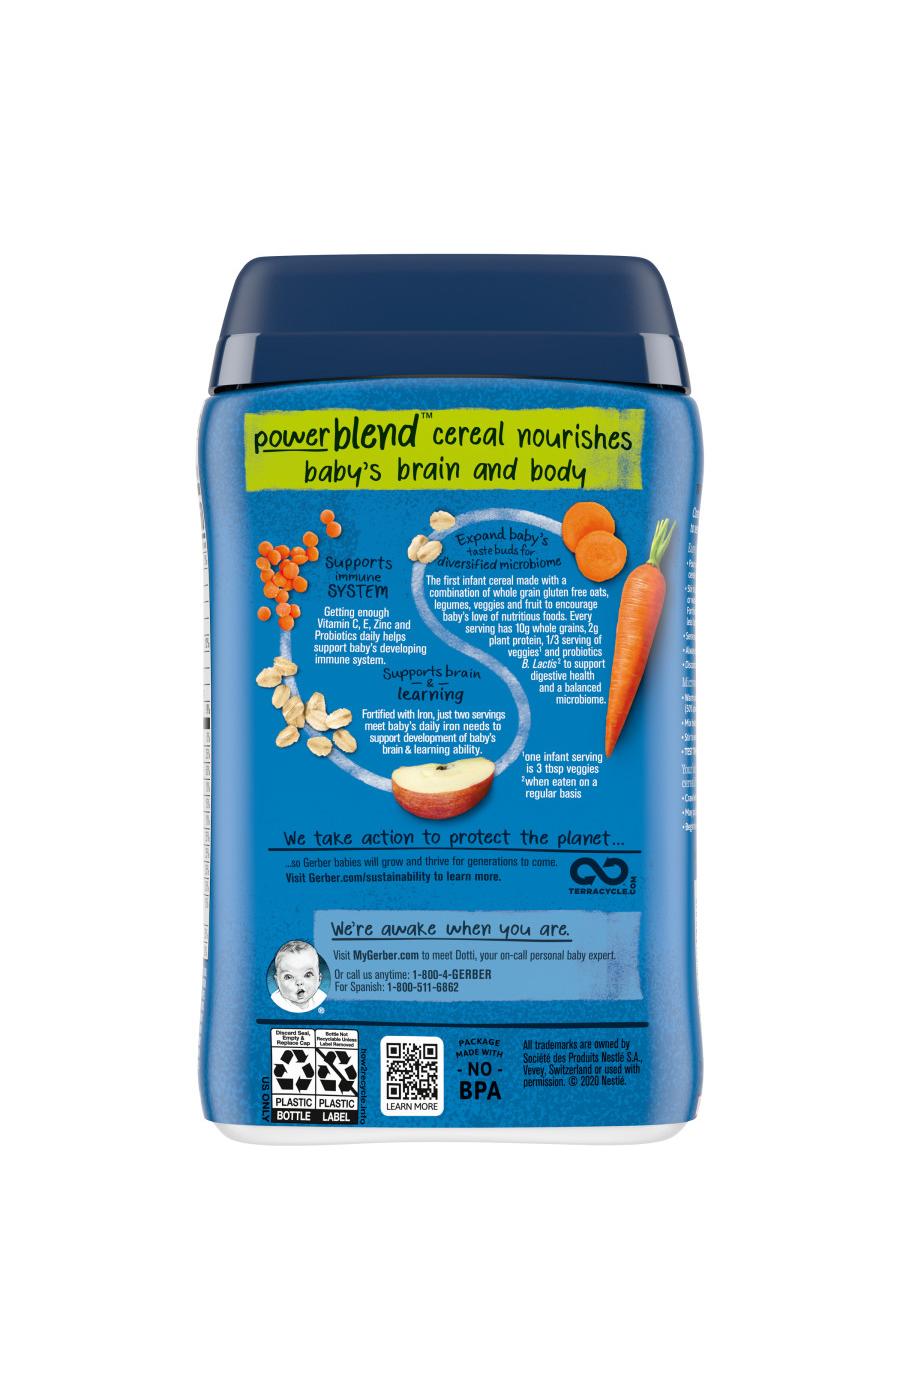 Gerber Cereal for Baby PowerBlend Probiotic - Oatmeal Lentil Carrots & Apples; image 7 of 8